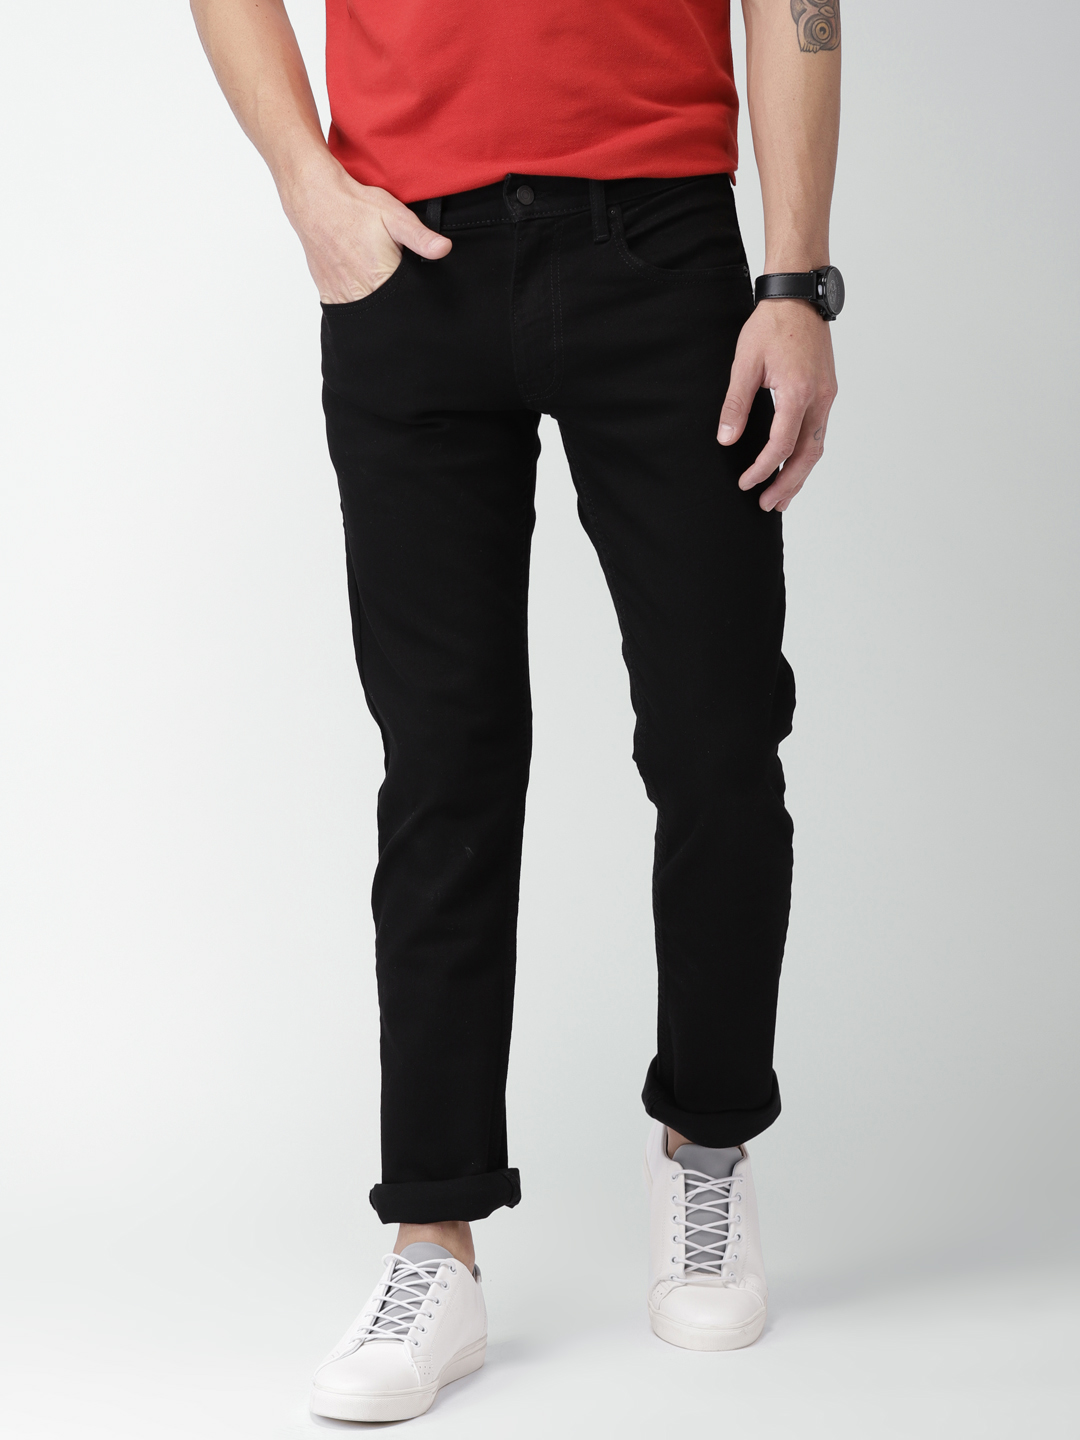 Levis jet black solid jeans - G3 